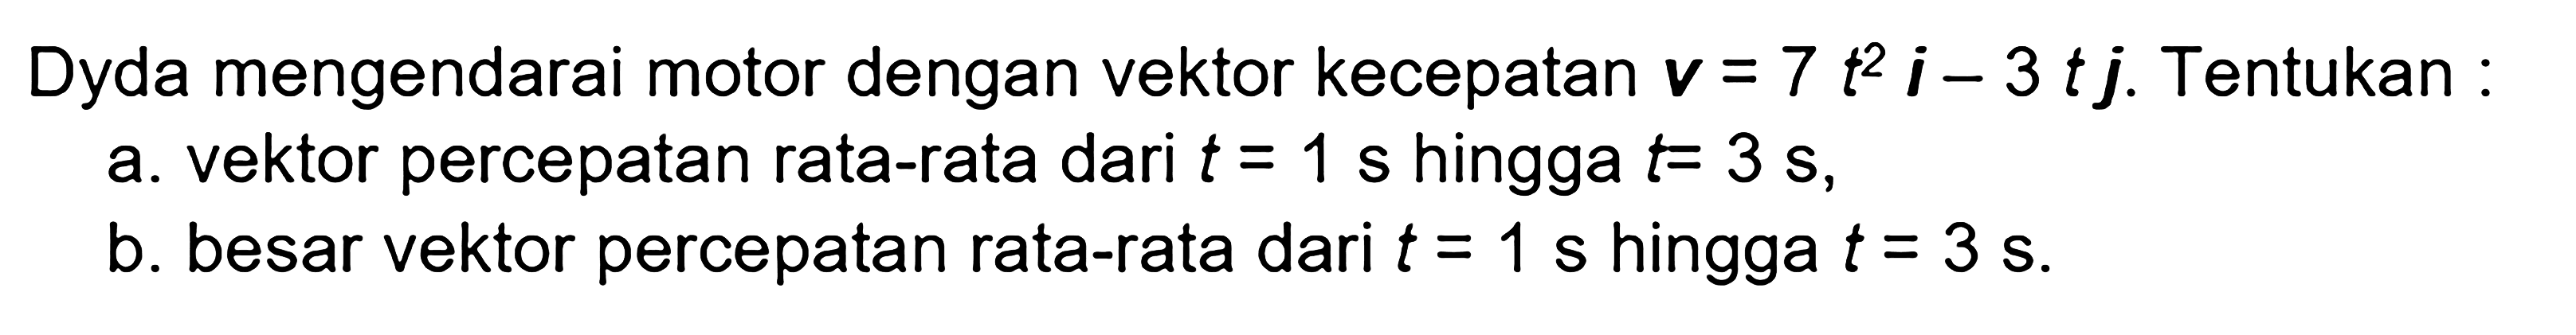 Dyda mengendarai motor dengan vektor kecepatan v = 7 t^2 i - 3 tj. Tentukan : a. vektor percepatan rata-rata dari t = 1 s hingga t = 3 s, b. besar vektor percepatan rata-rata dari t = 1 s hingga t = 3 s.